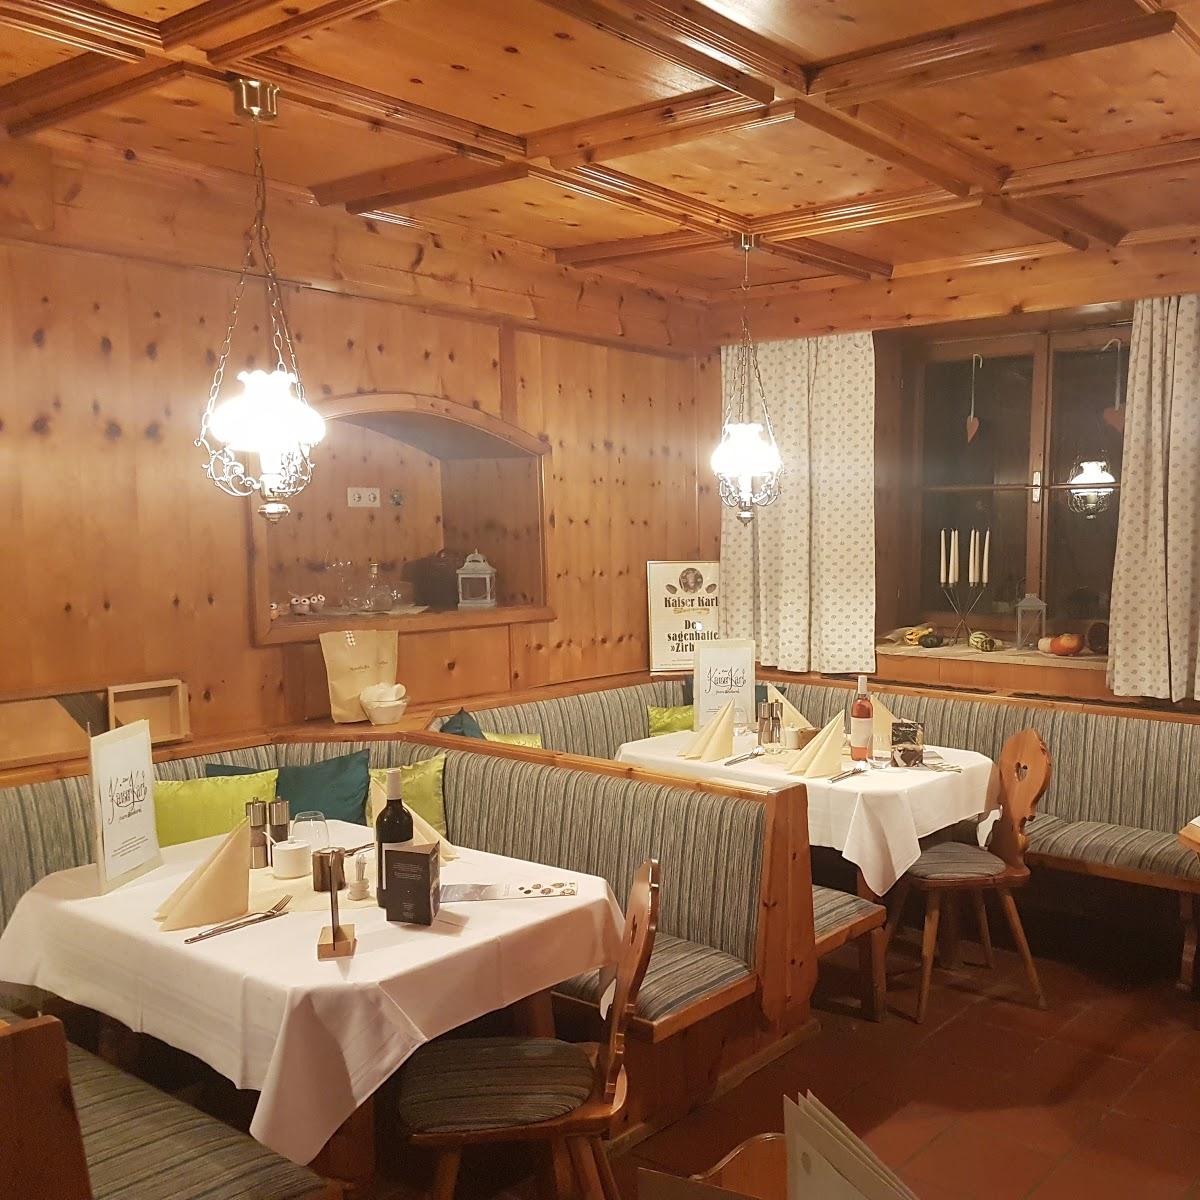 Restaurant "zum Kaiser Karl pure & natural" in Großgmain